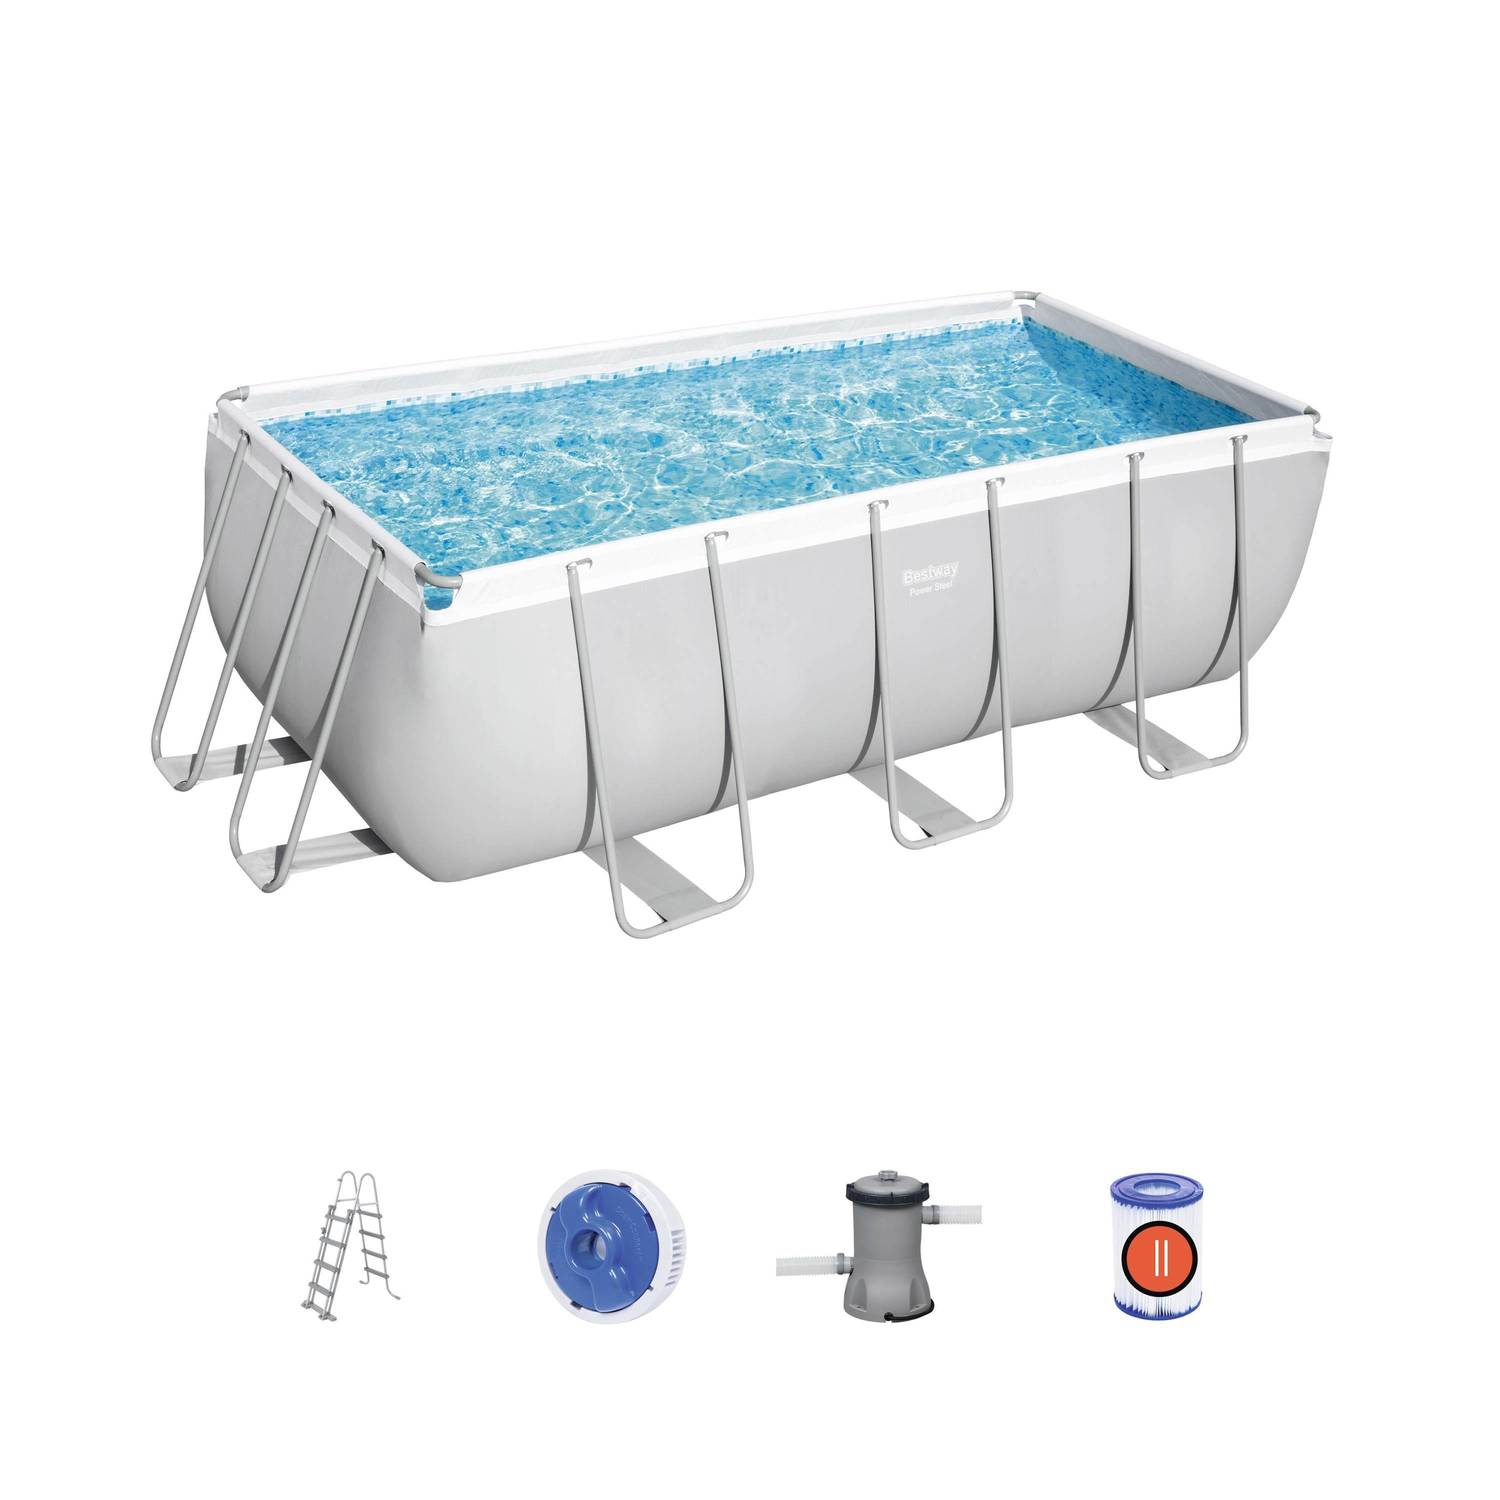 4x2m above ground tubular swimming pool, grey, rectangular, with pump, filter cartridge, diffuser and ladder - Bestway Vostok - Grey Photo2